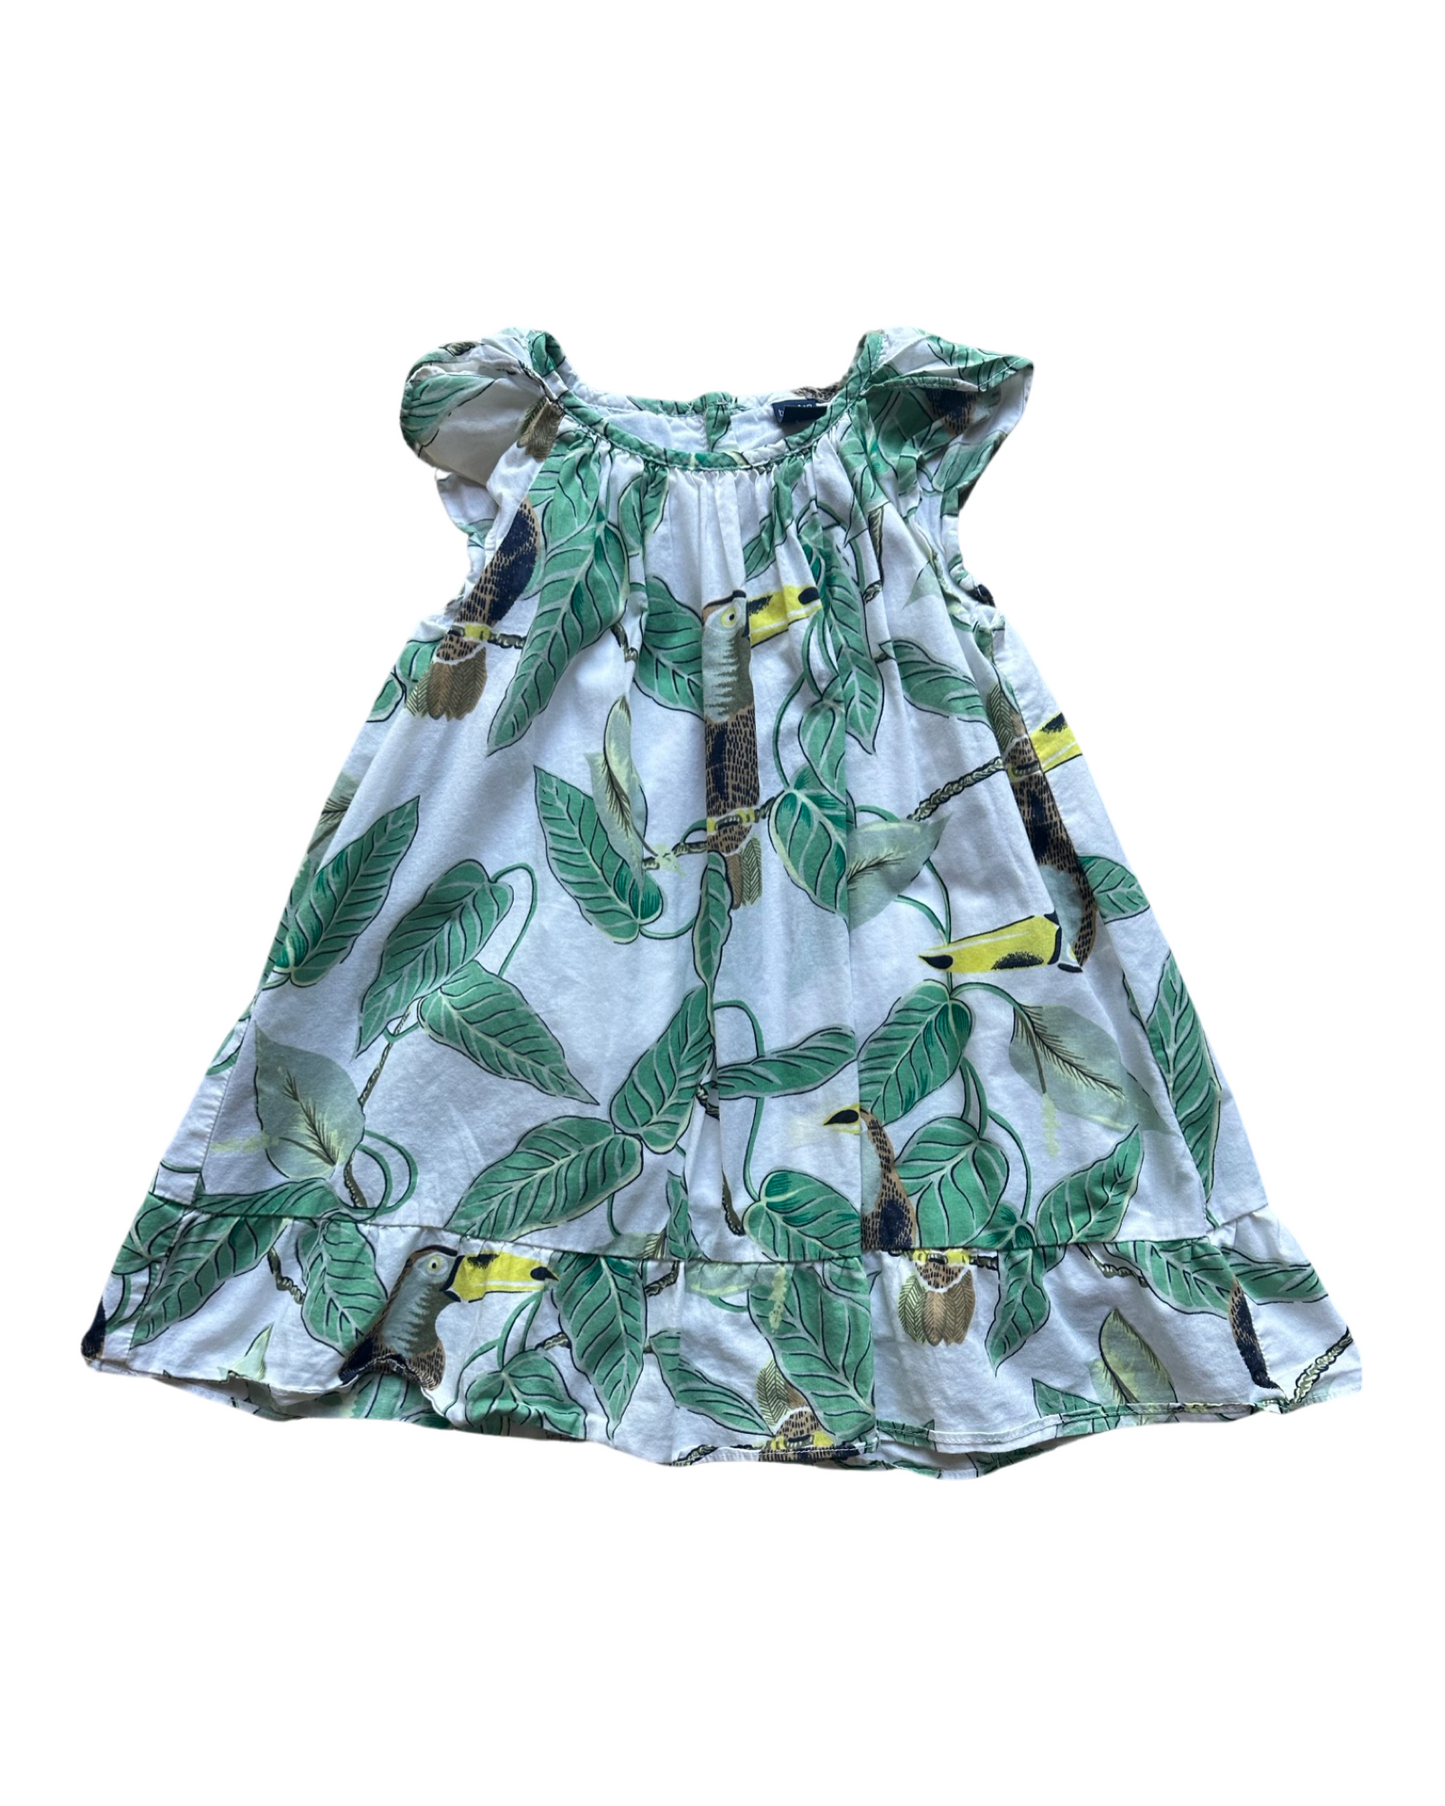 Baby Gap jungle print dress (size 2yrs)